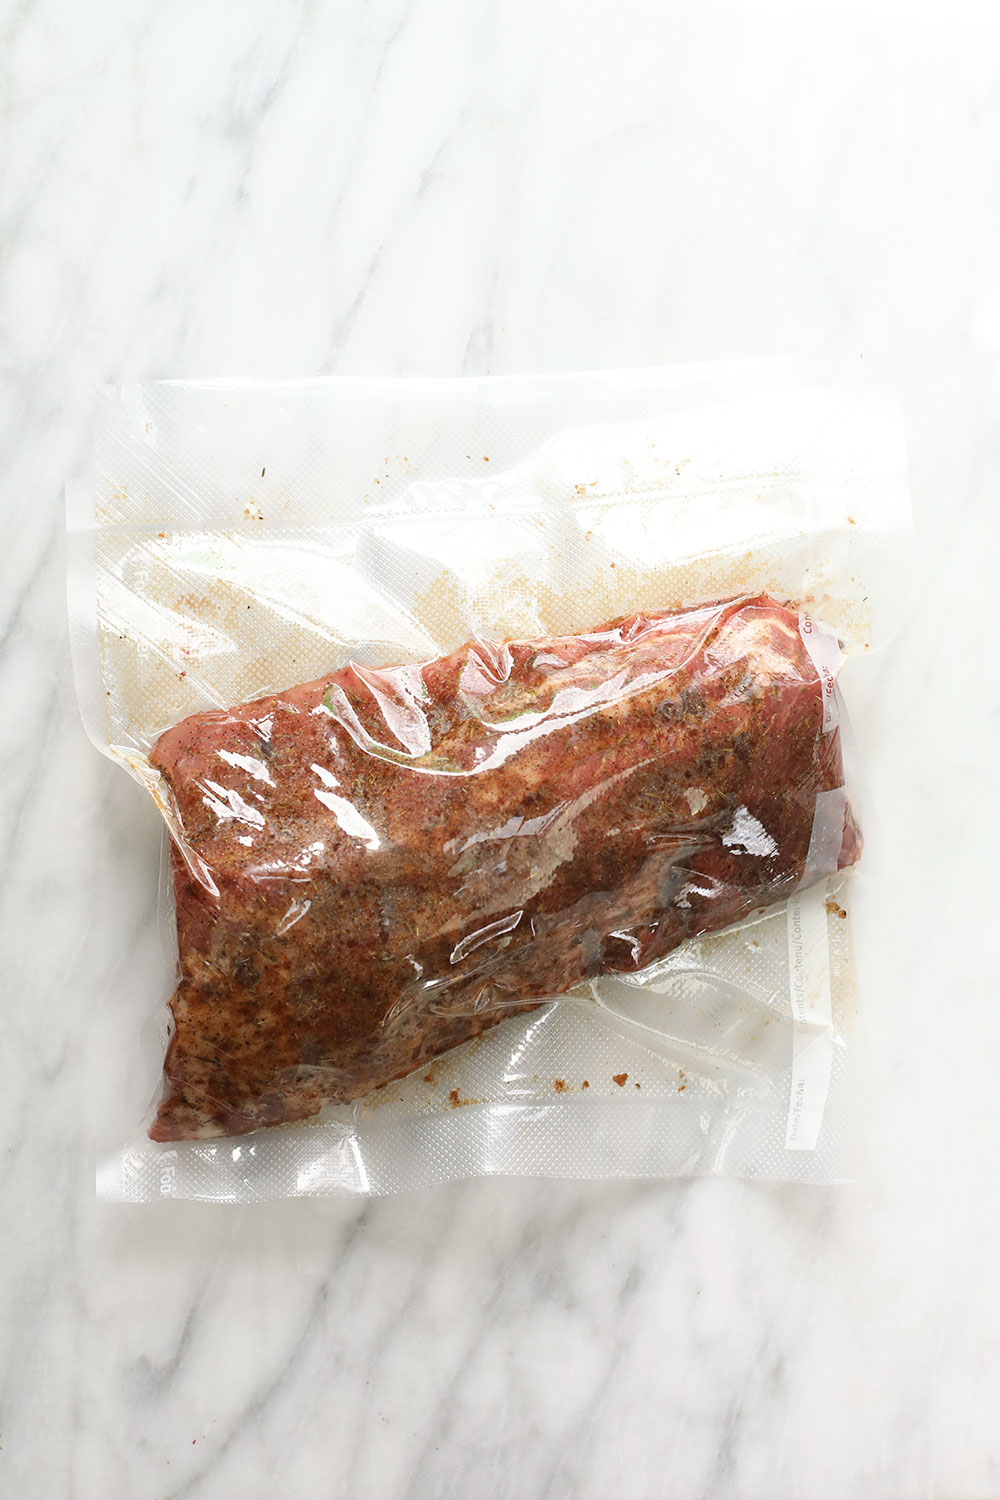 Sous vide ribs in a food savor bag. 